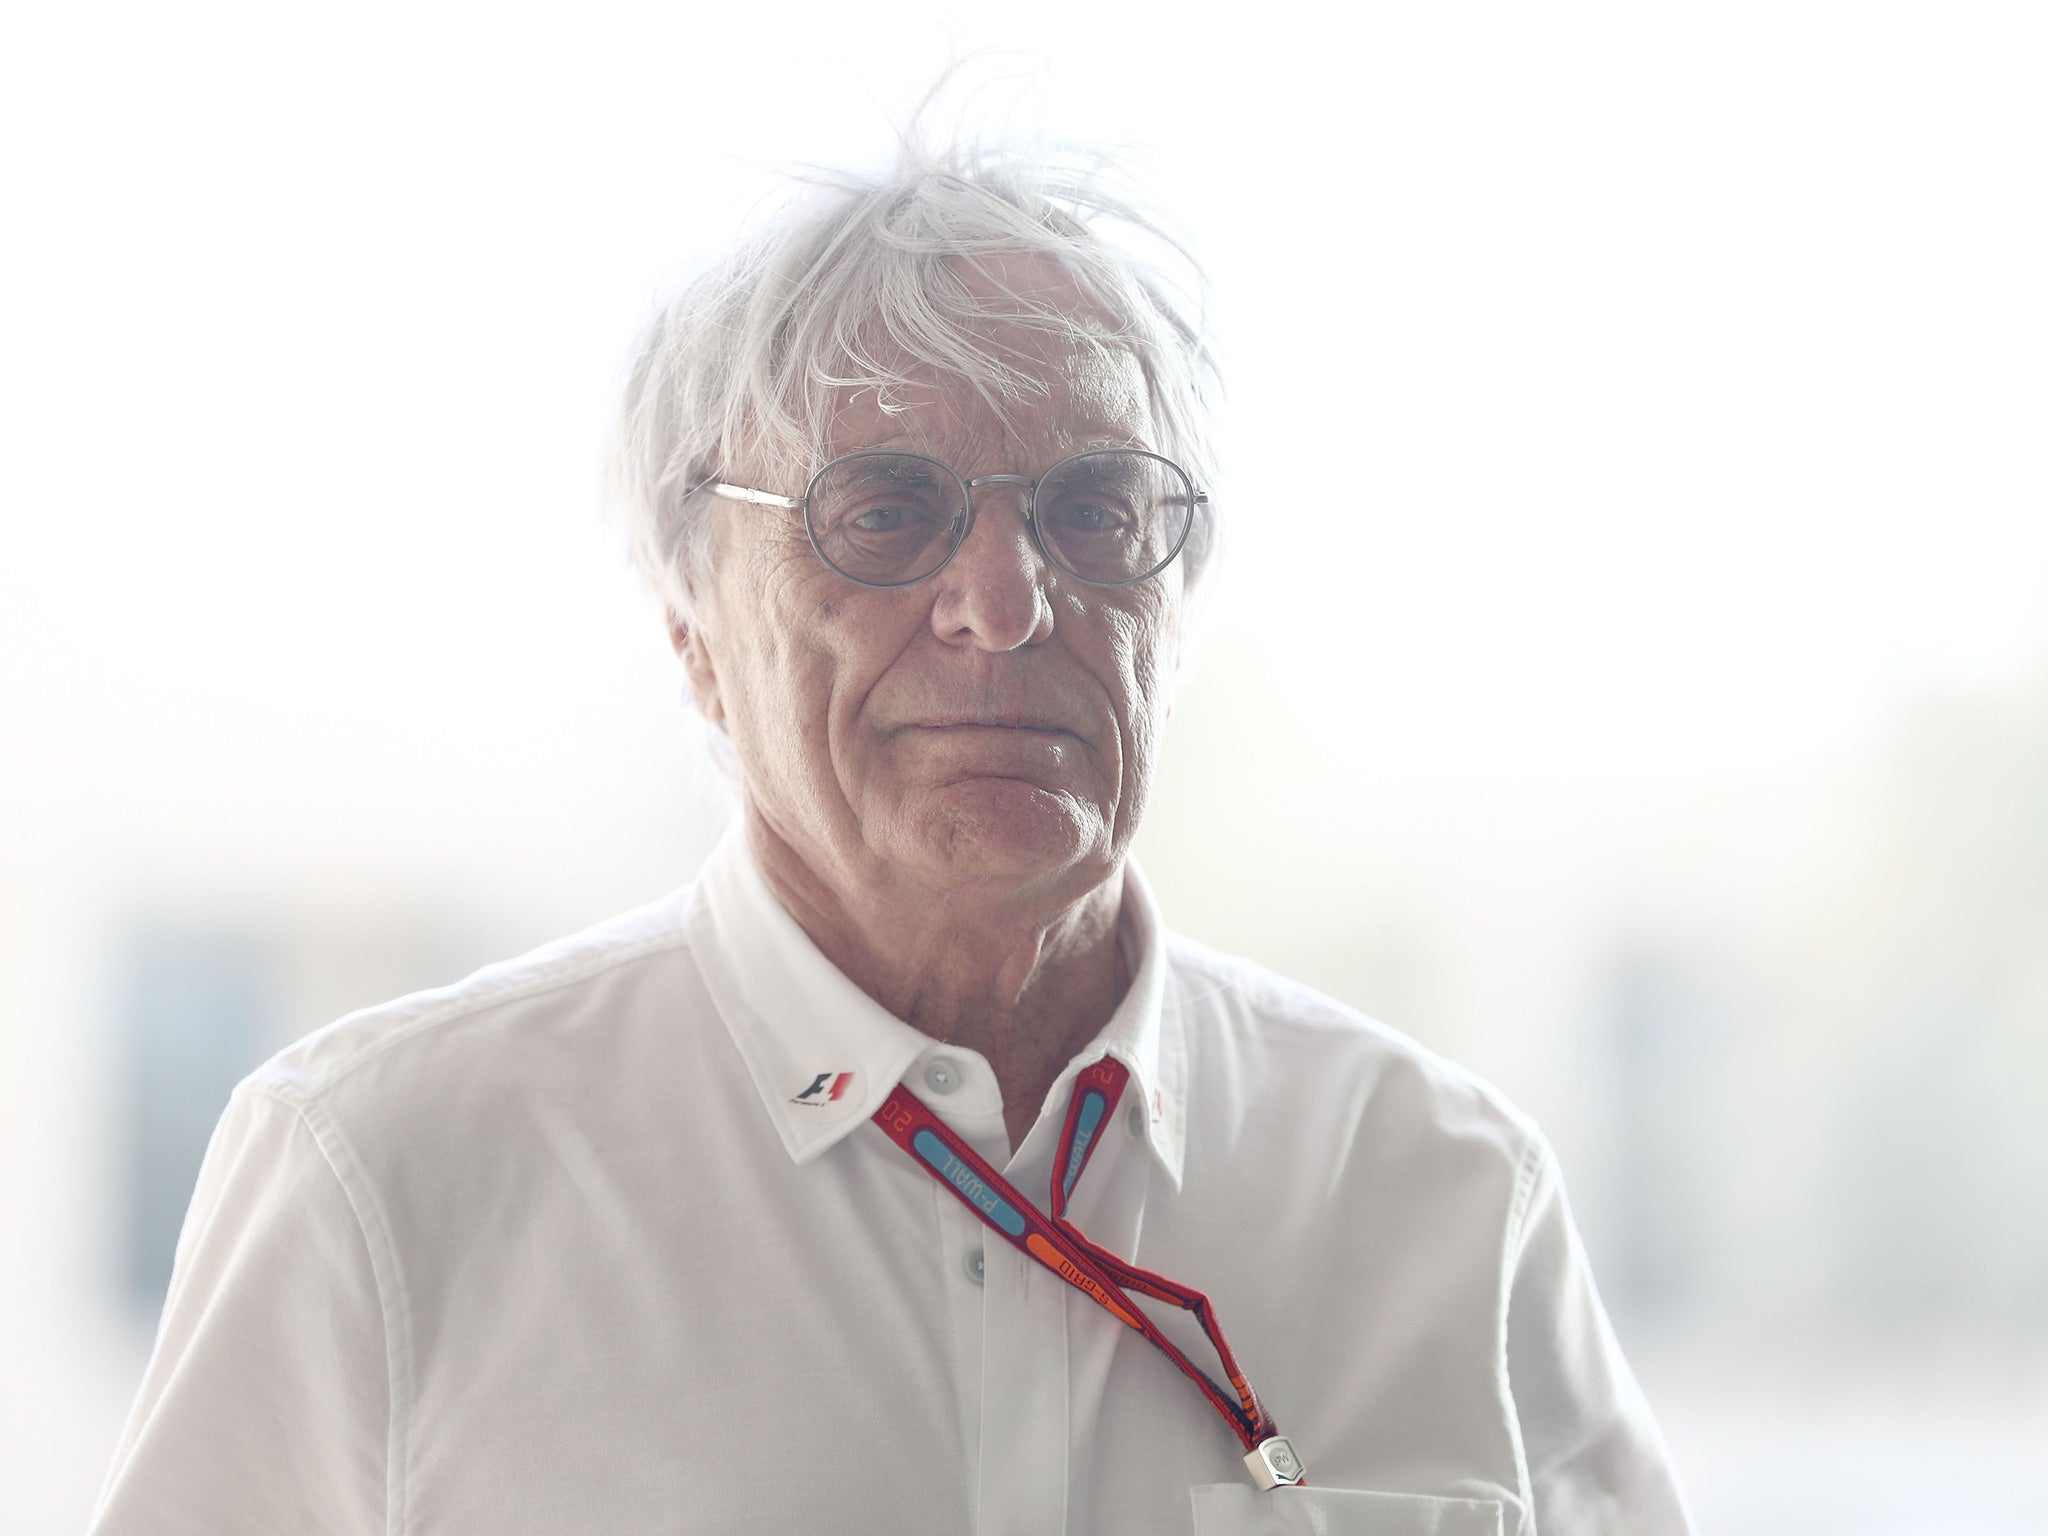 Bernie Ecclestone has ruled over Formula One for 40 years